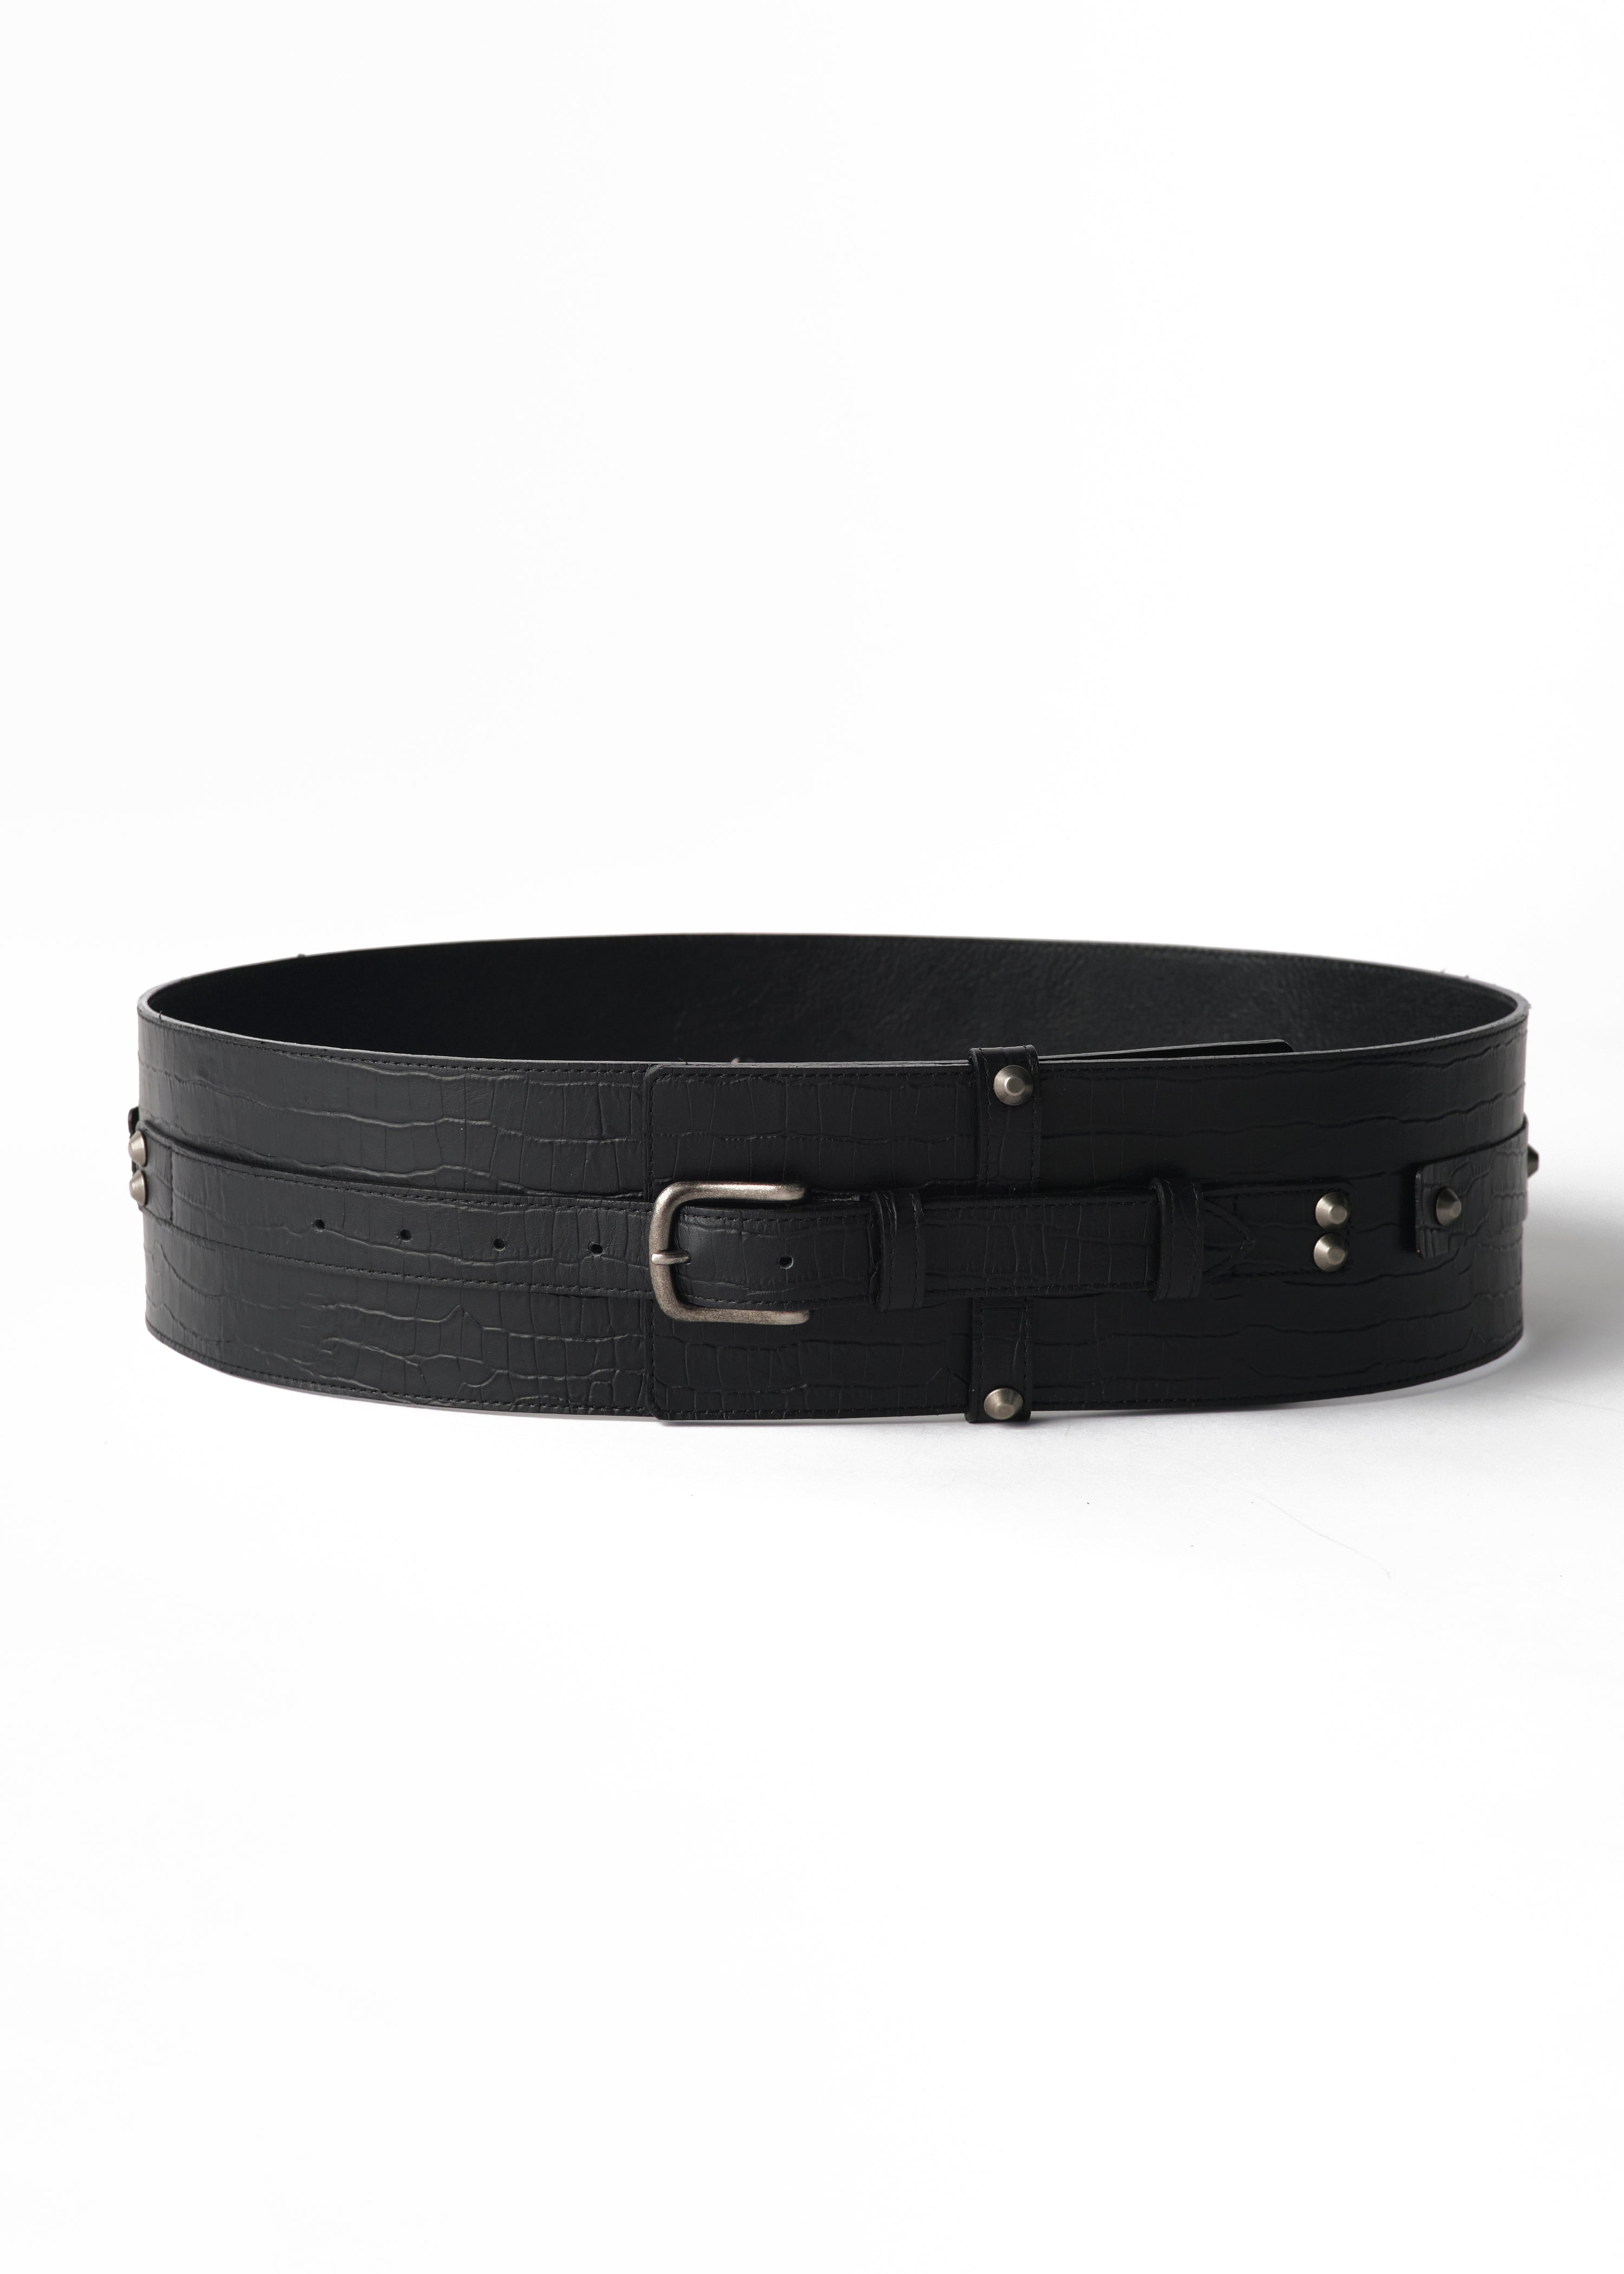 Croco Black: Men's obi belt | Leather type